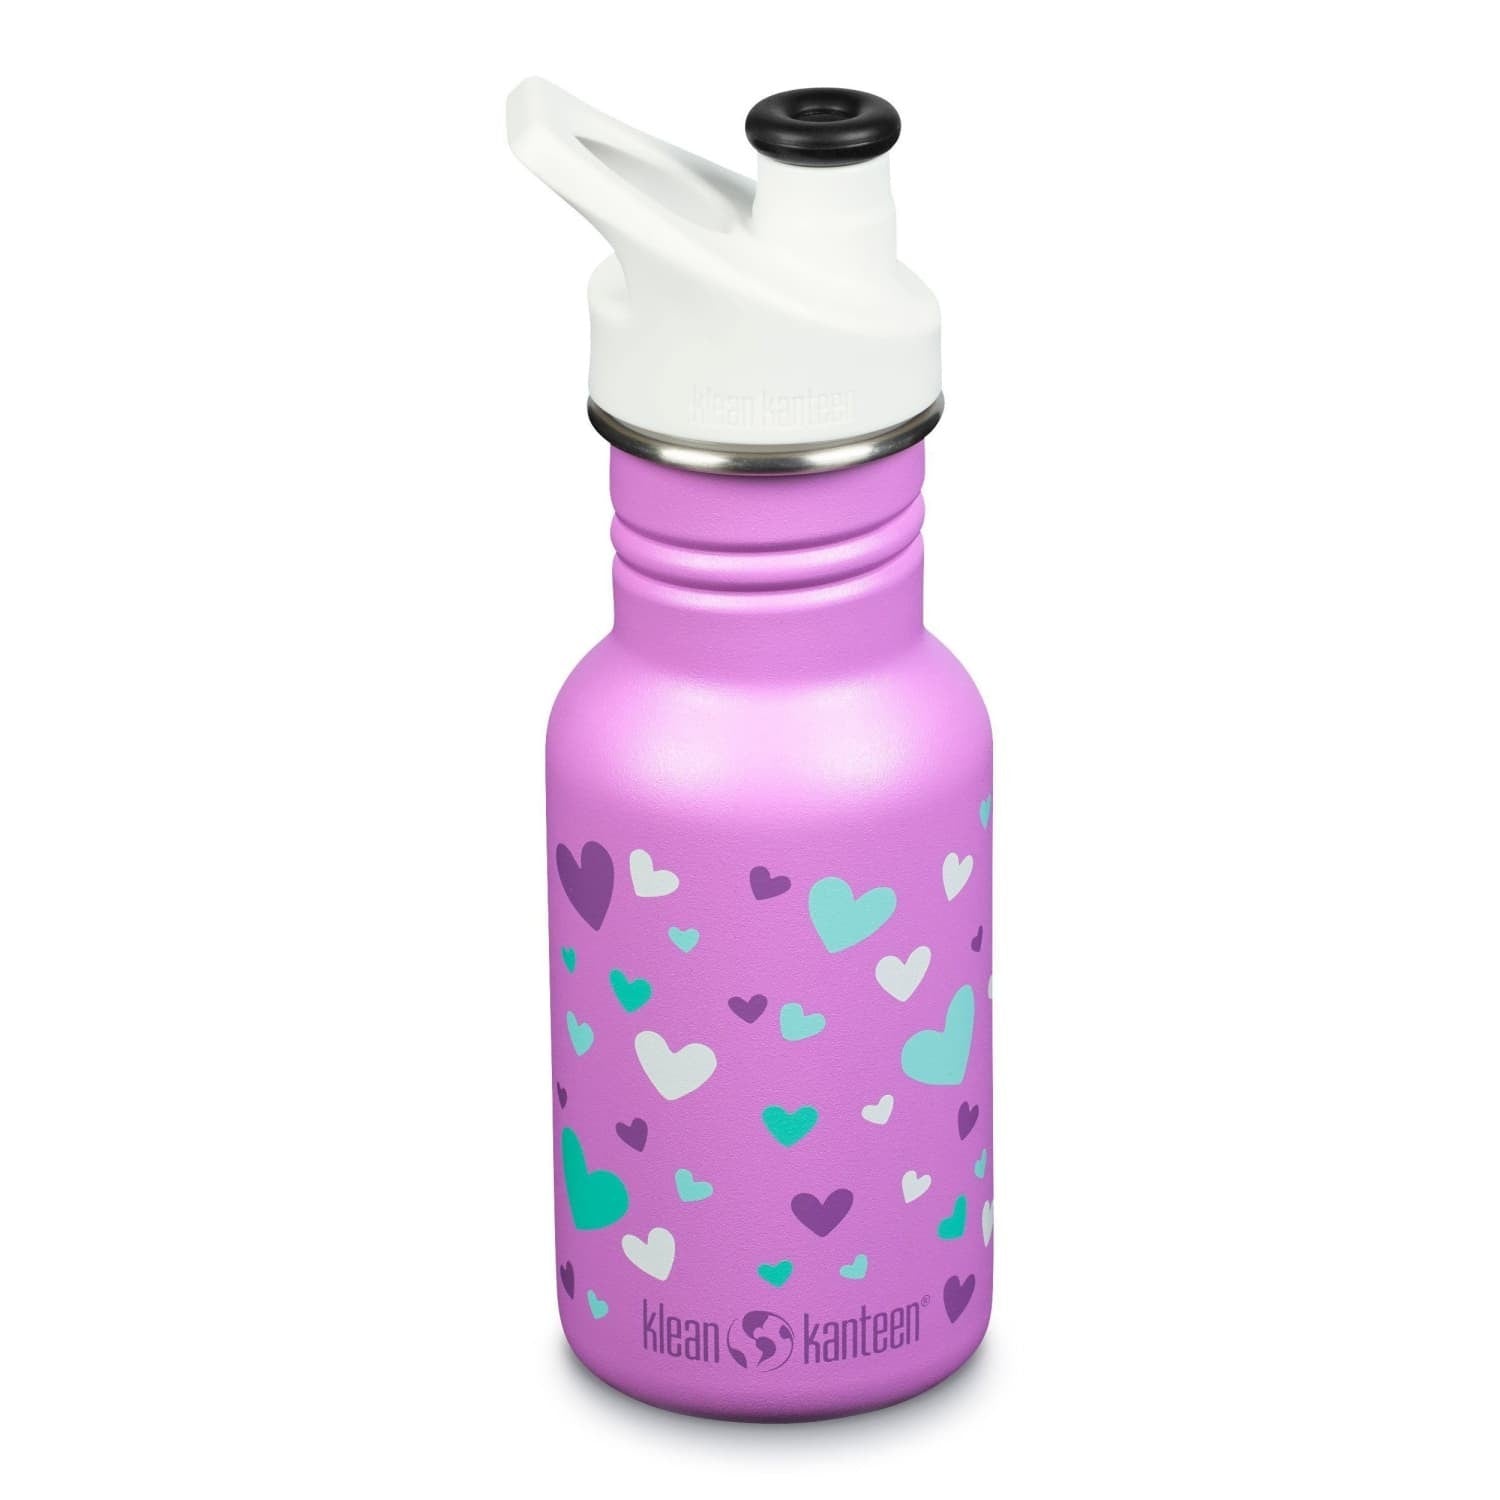 Klean kanteen kids reusable stainless steel 12 oz water bottle purple orchid hearts